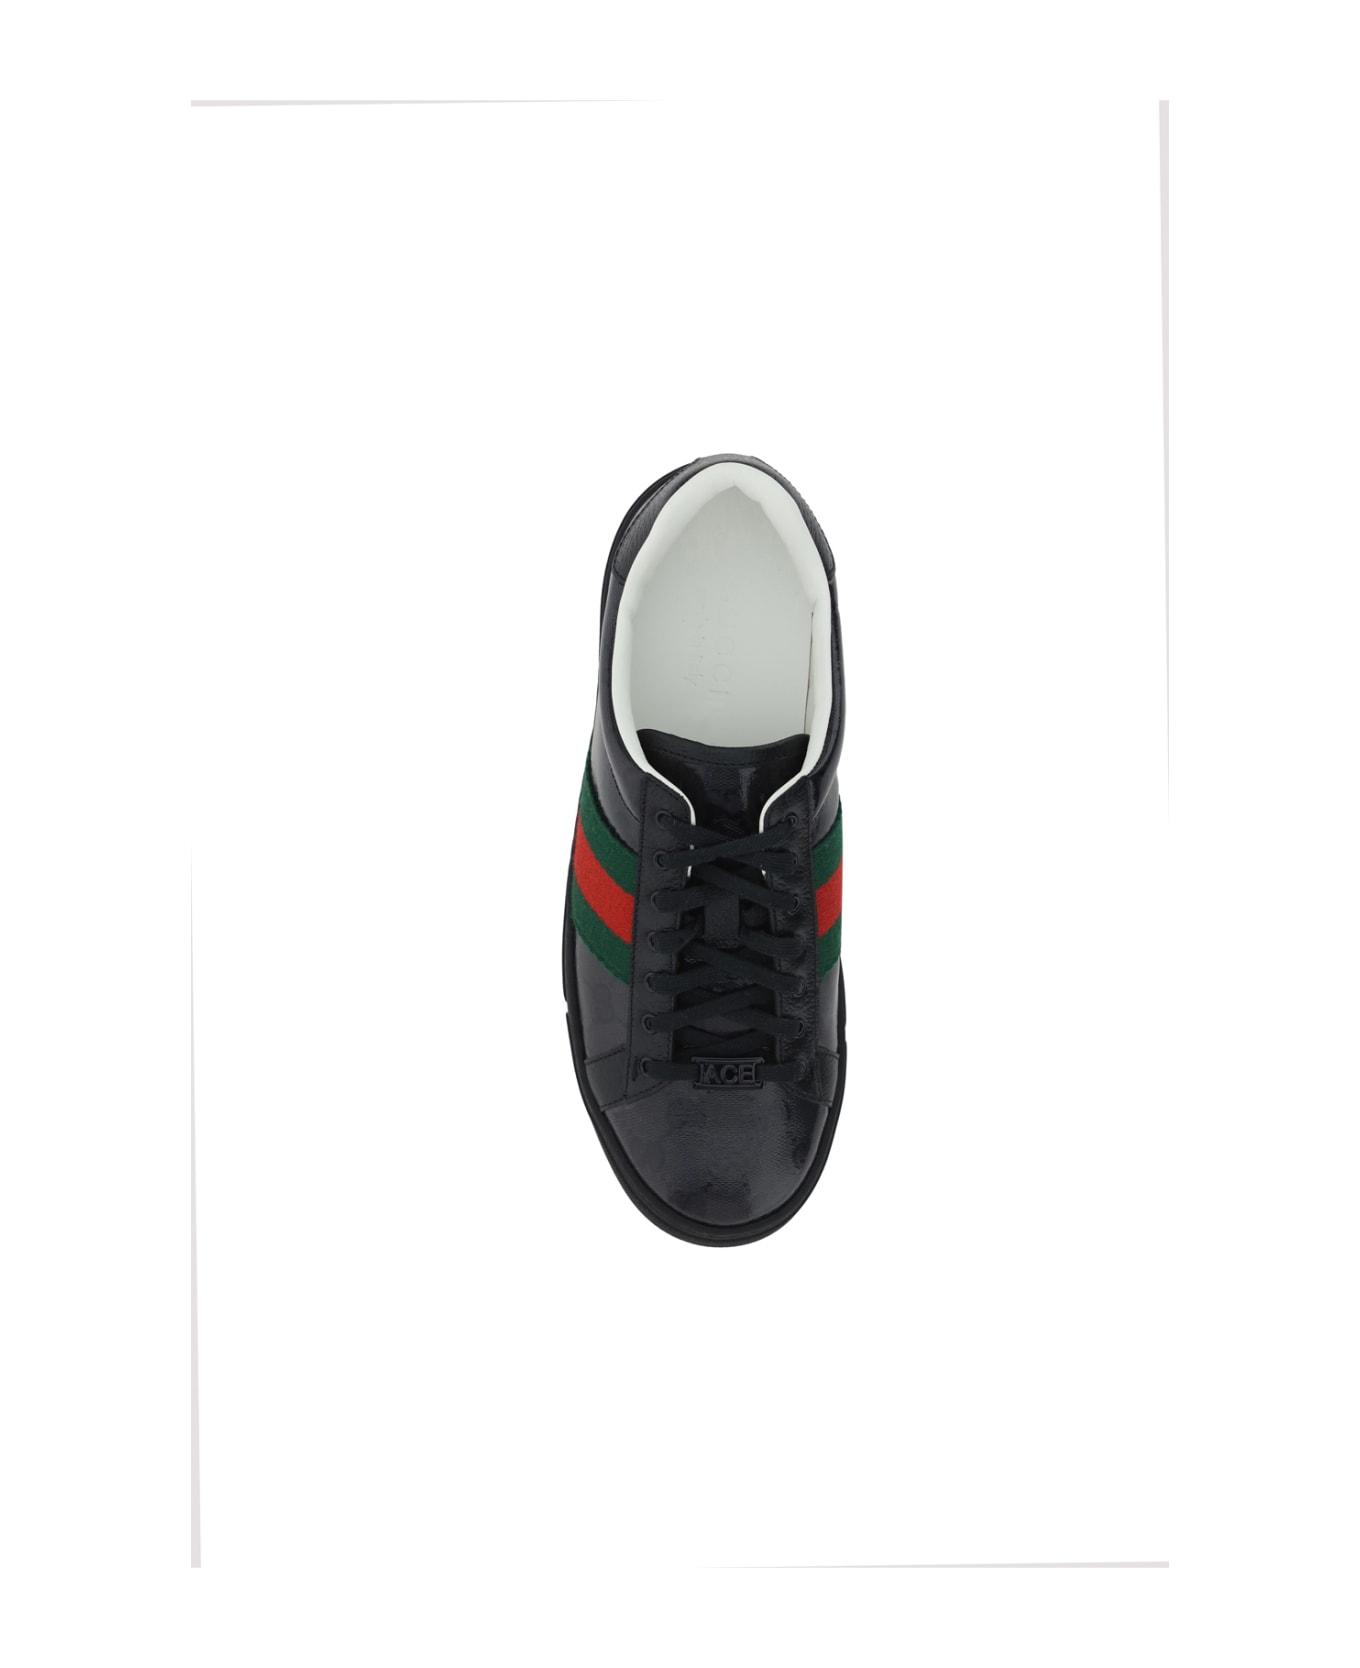 Gucci Ace Sneakers - Black/black